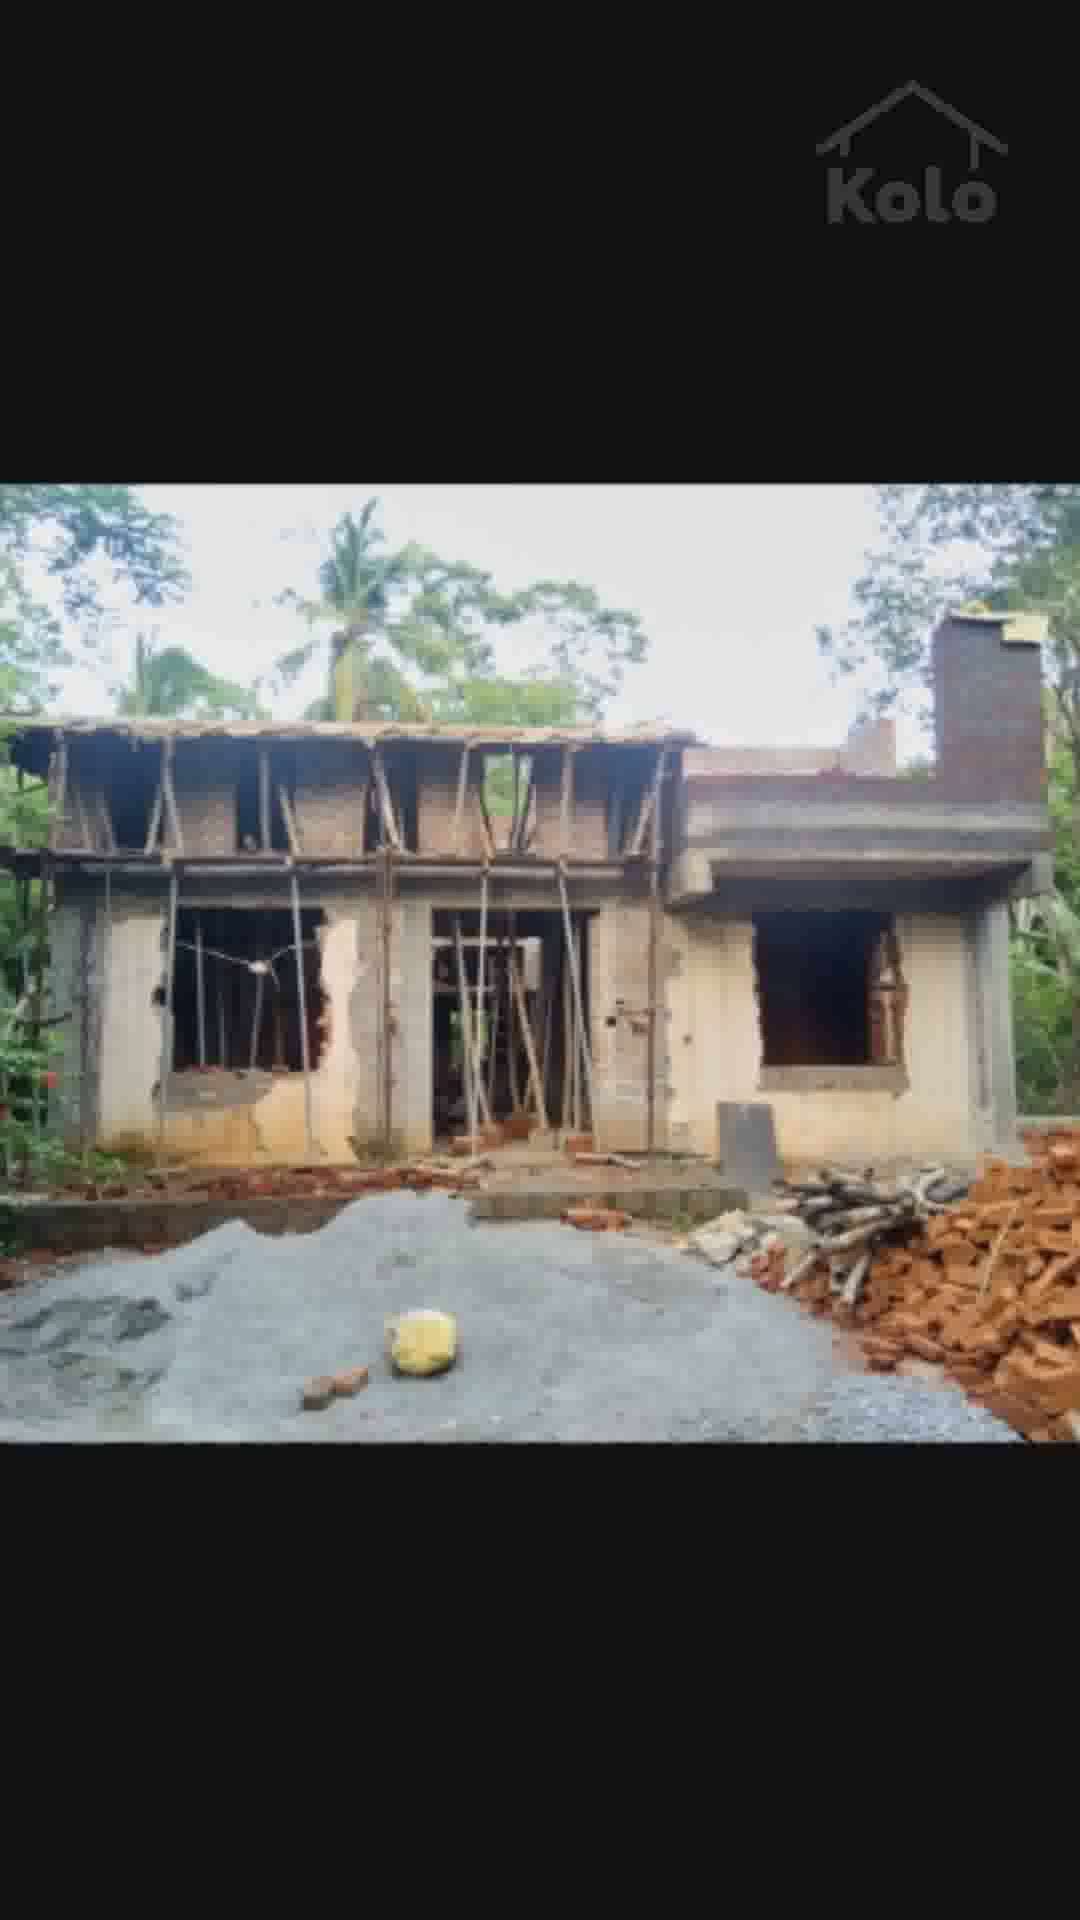 Home Renovation | Colonial Villa Style | 30 Lakhs

Design: Dev Anand
Civil Engineer
Palakkad, Kerala
Contact: 8281393690

Kolo App link: https://koloapp.in/posts/1628889077

Kolo - India’s Largest Home Construction Community :house:

#home #keralahouse #residence #residencedesign #house #koloapp #keralagram #reelitfeelit #keralagodsowncountry #homedecor #homedesign #keralahomedesignz #keralavibes #instagood #interiordesign #interior #interiordesigner #homedecoration #homedesignideas #keralahomes #homedecor #homes #traditional #kerala #homesweethome #architecturedesign #architecture #keralaarchitecture